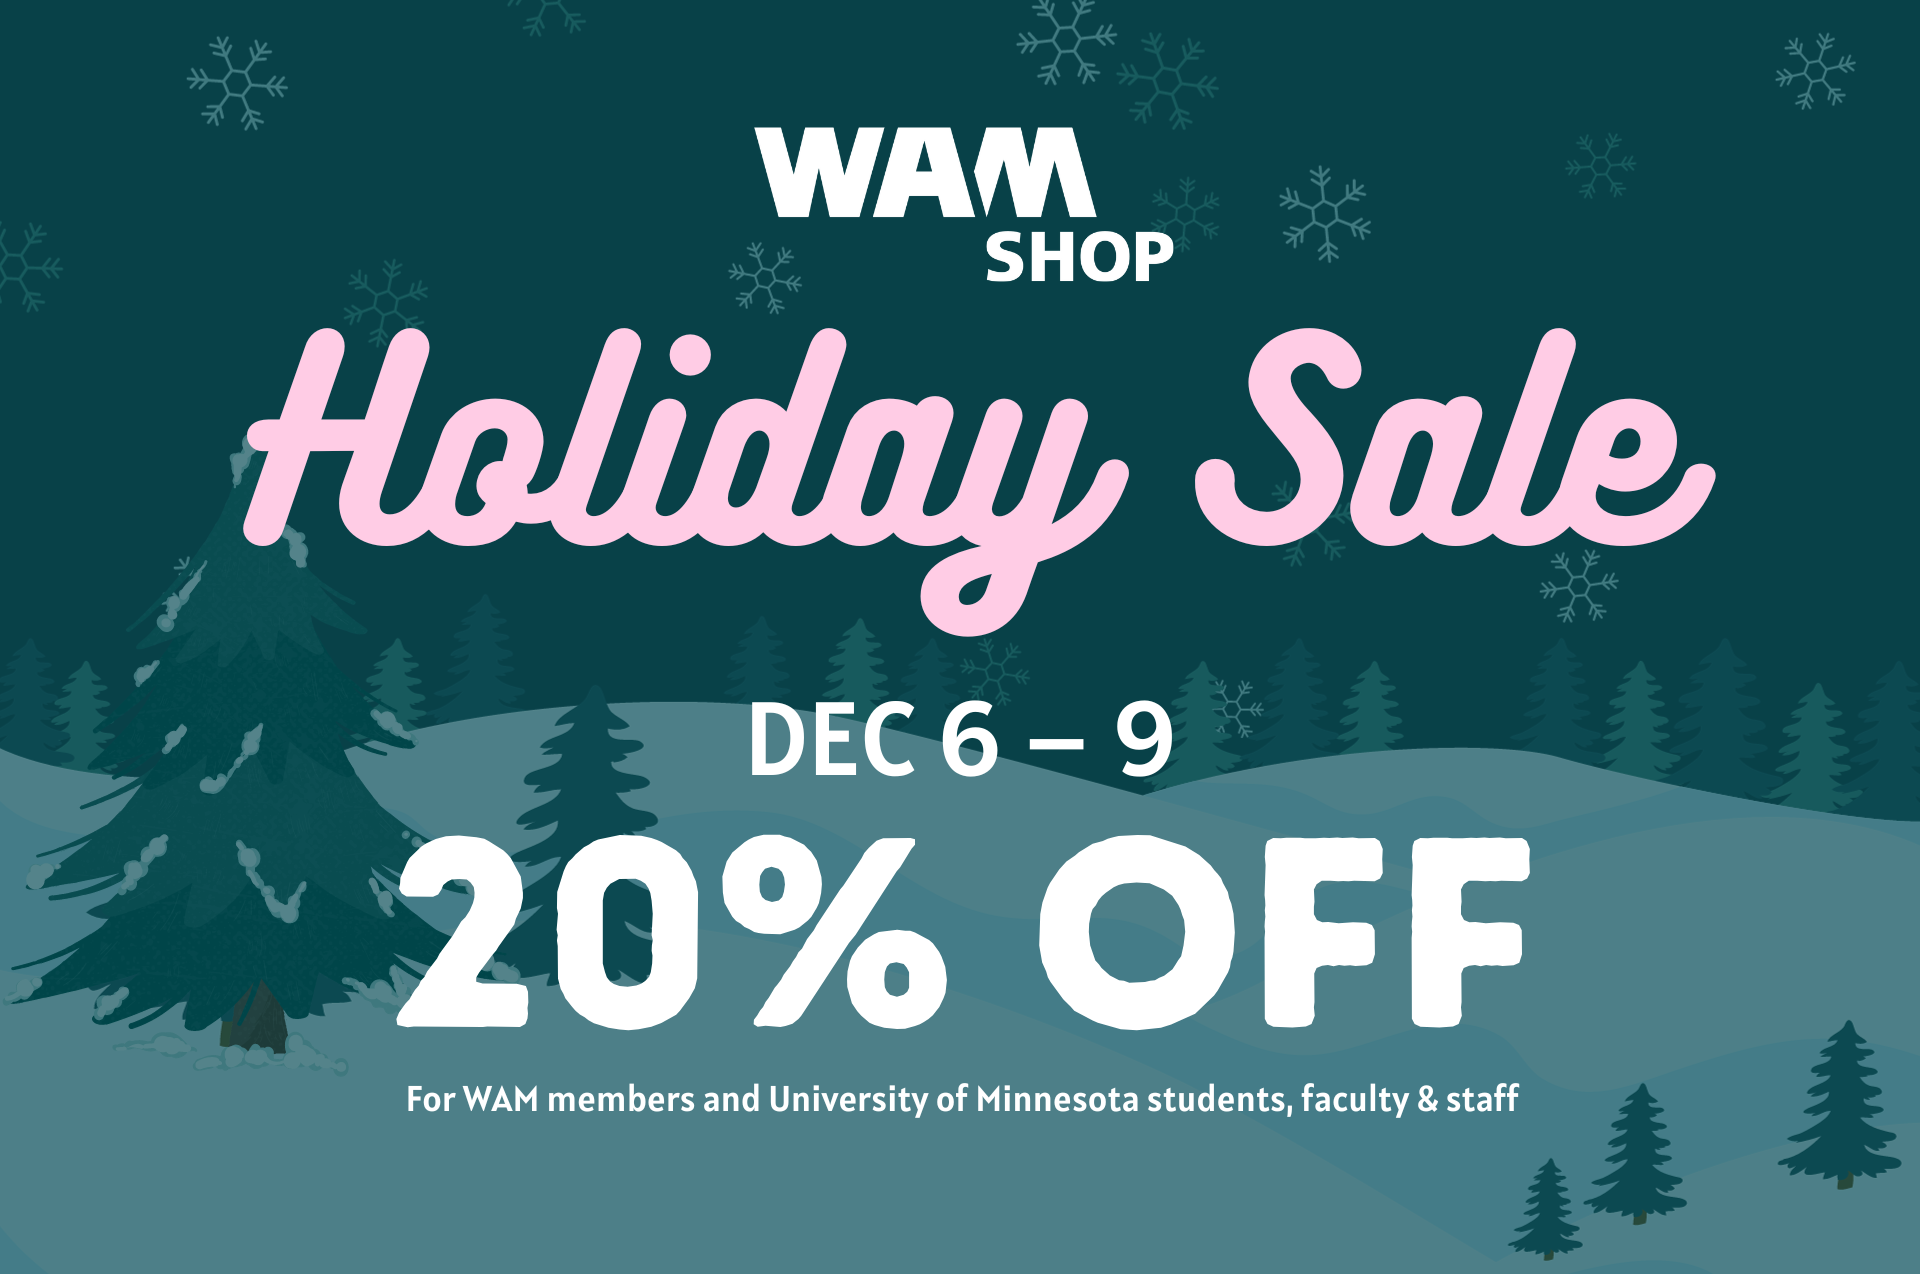 WAM Shop Holiday Sale Dec 6 - 9, 20% off for UMN Community. 